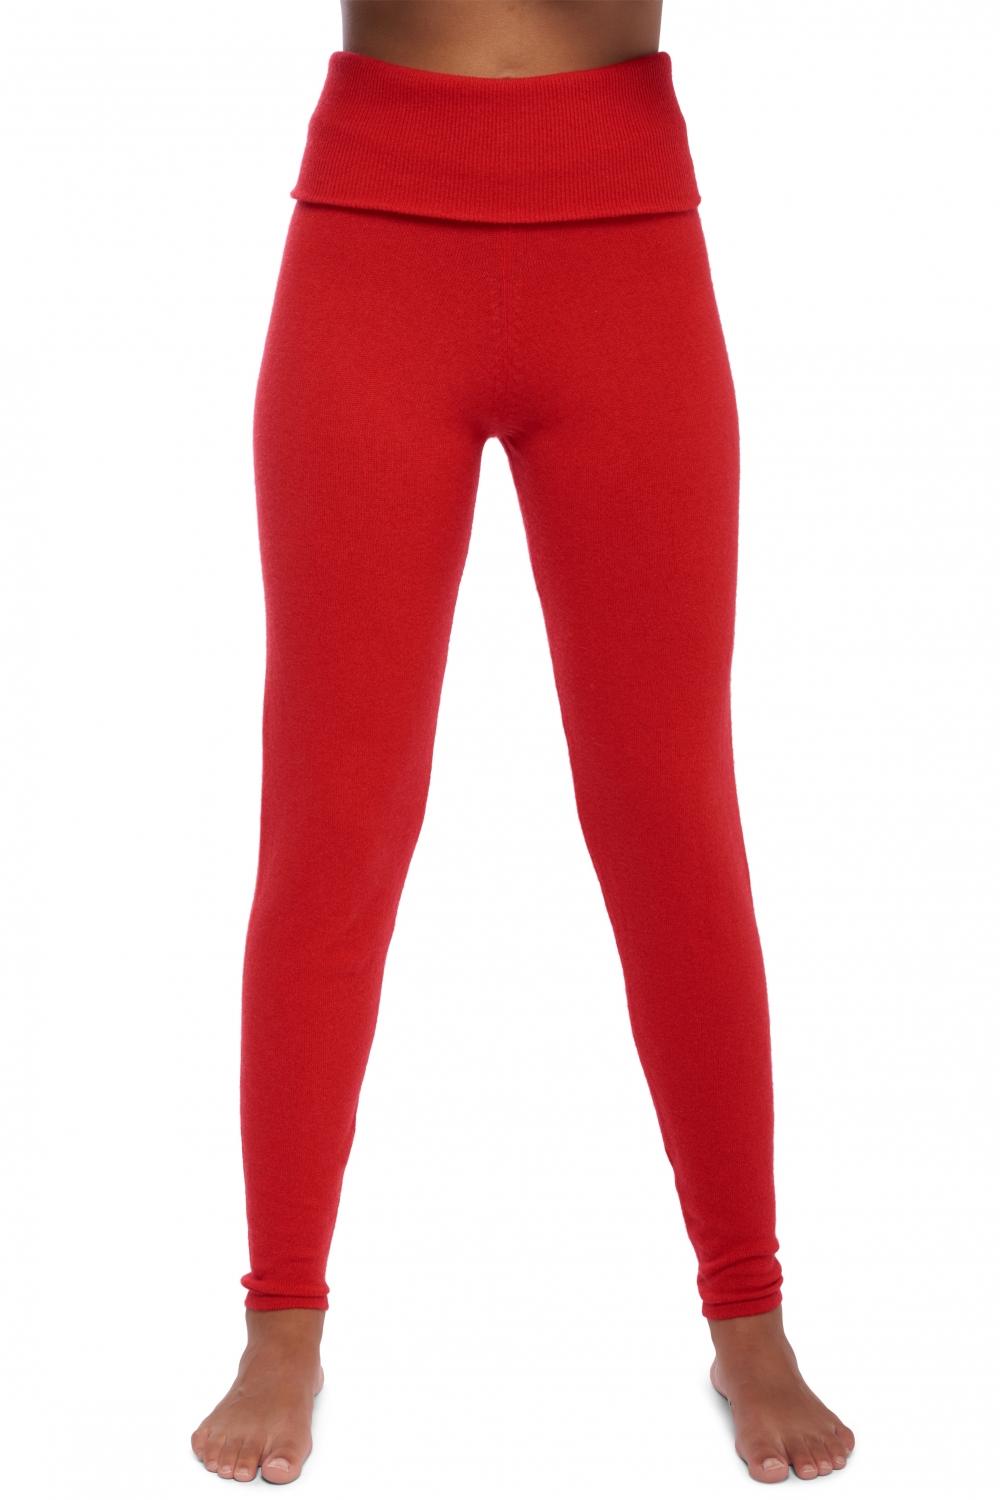 Cachemire accessoires homewear shirley rouge 3xl